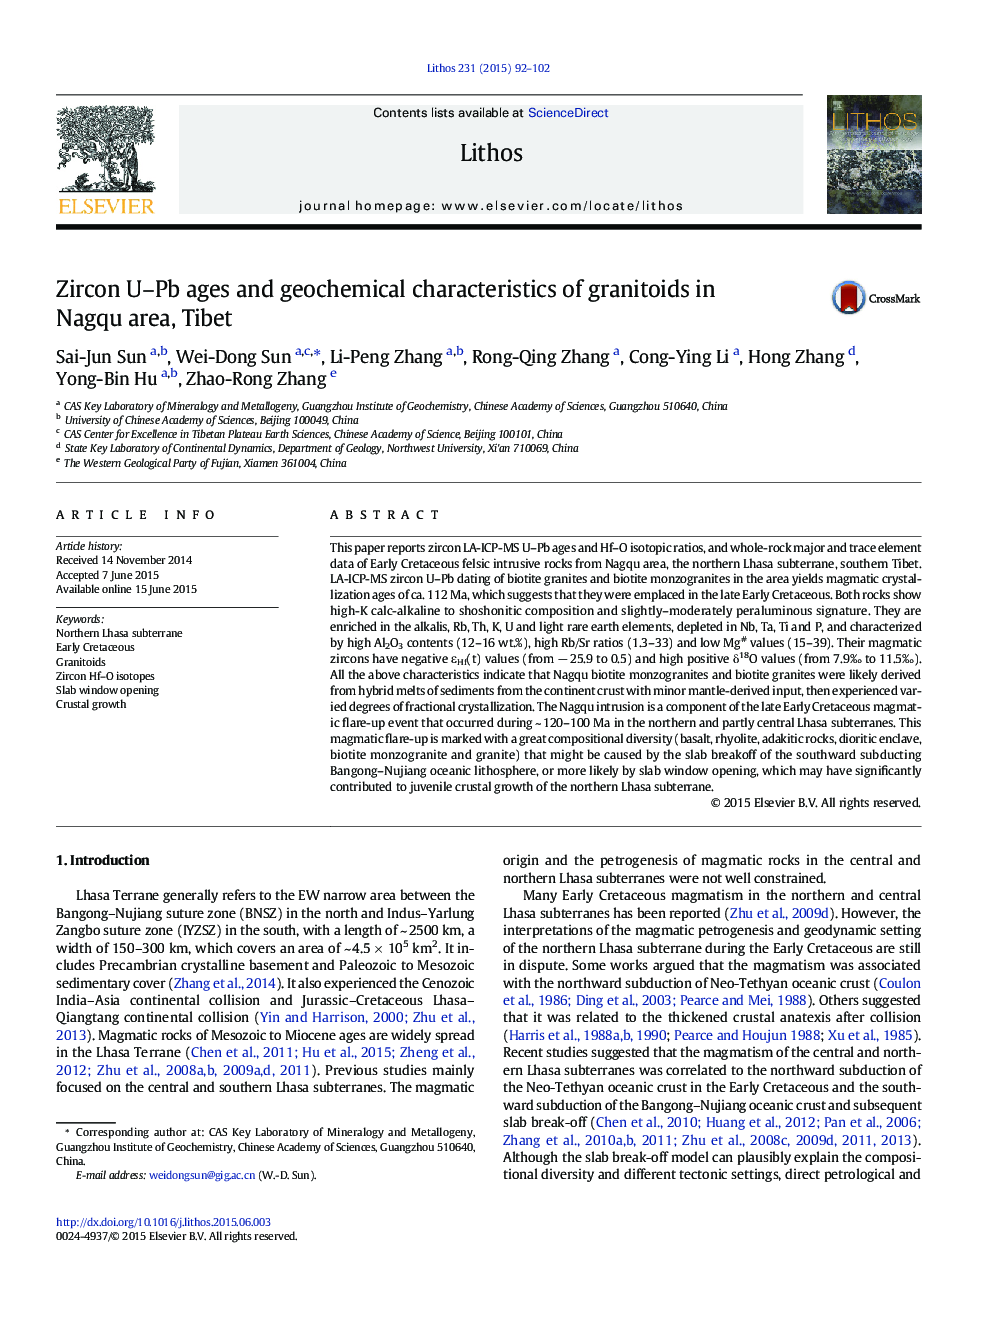 Zircon U–Pb ages and geochemical characteristics of granitoids in Nagqu area, Tibet